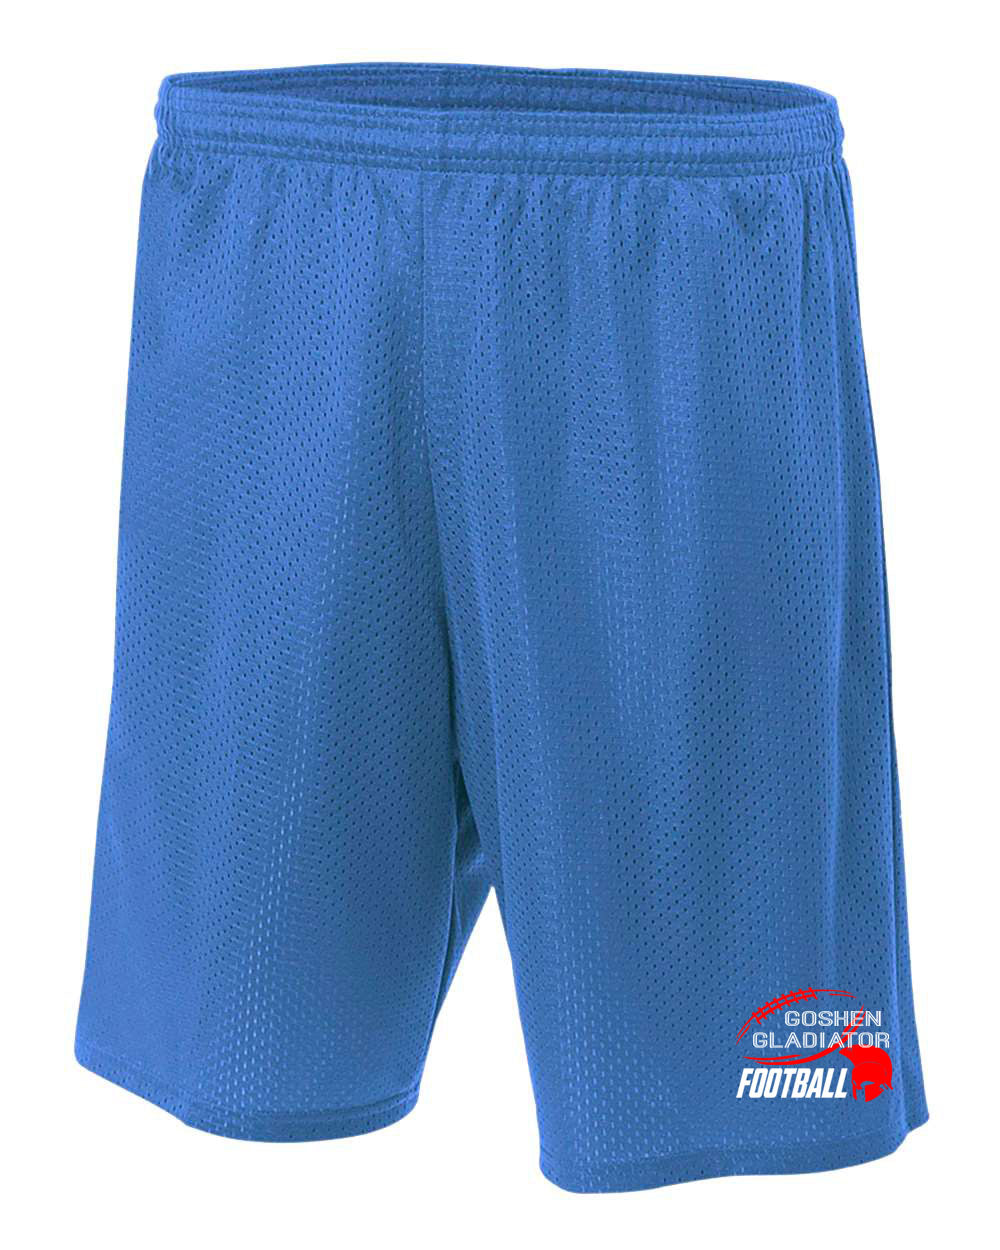 Goshen Football Design 6 Mesh Shorts